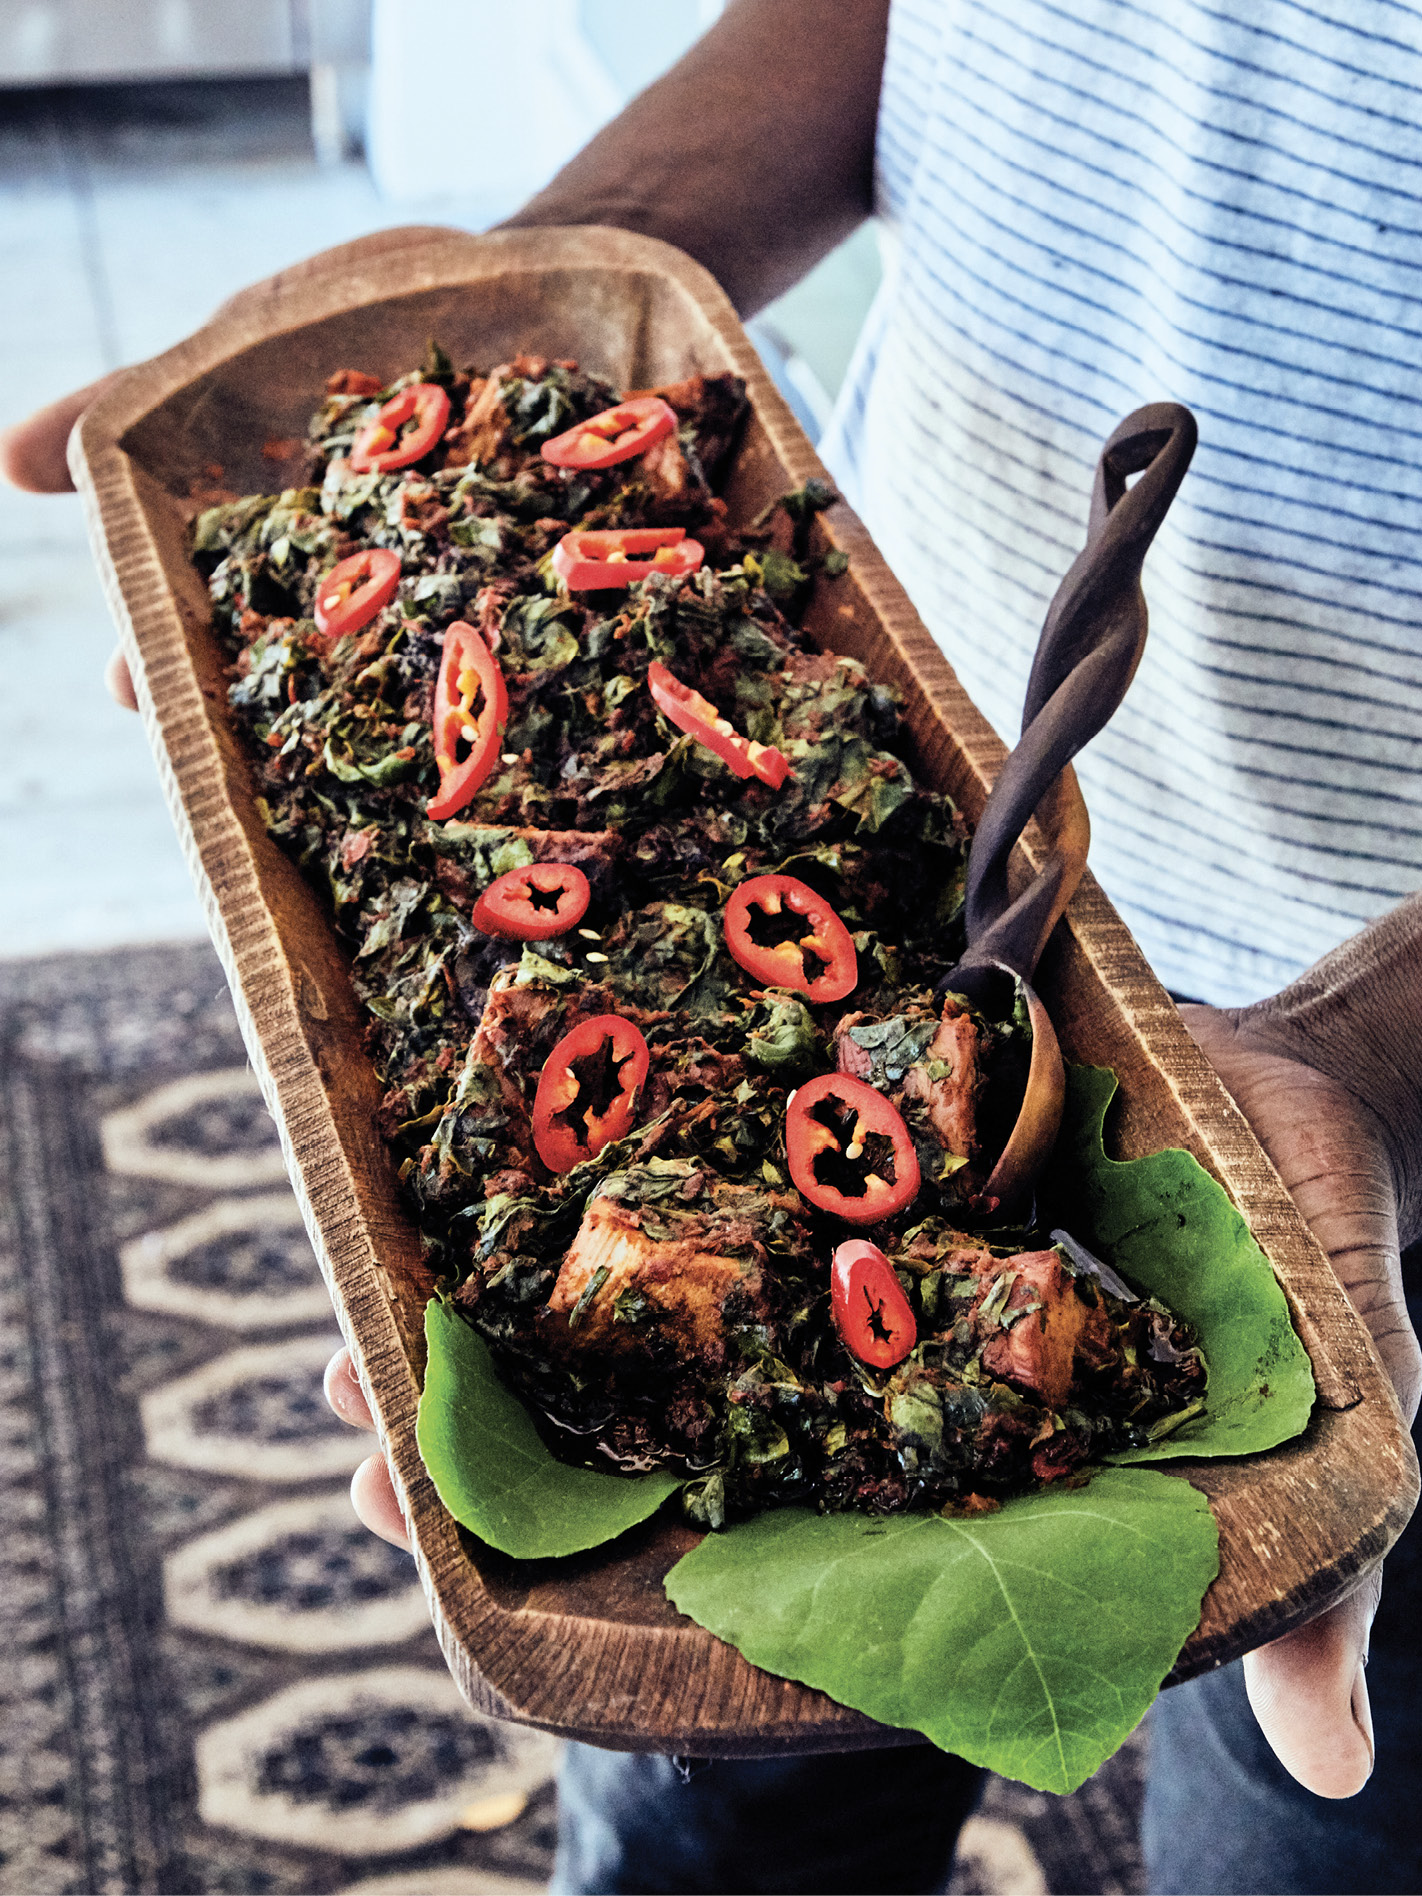 Efo riro, a Yoruba-style spinach stew